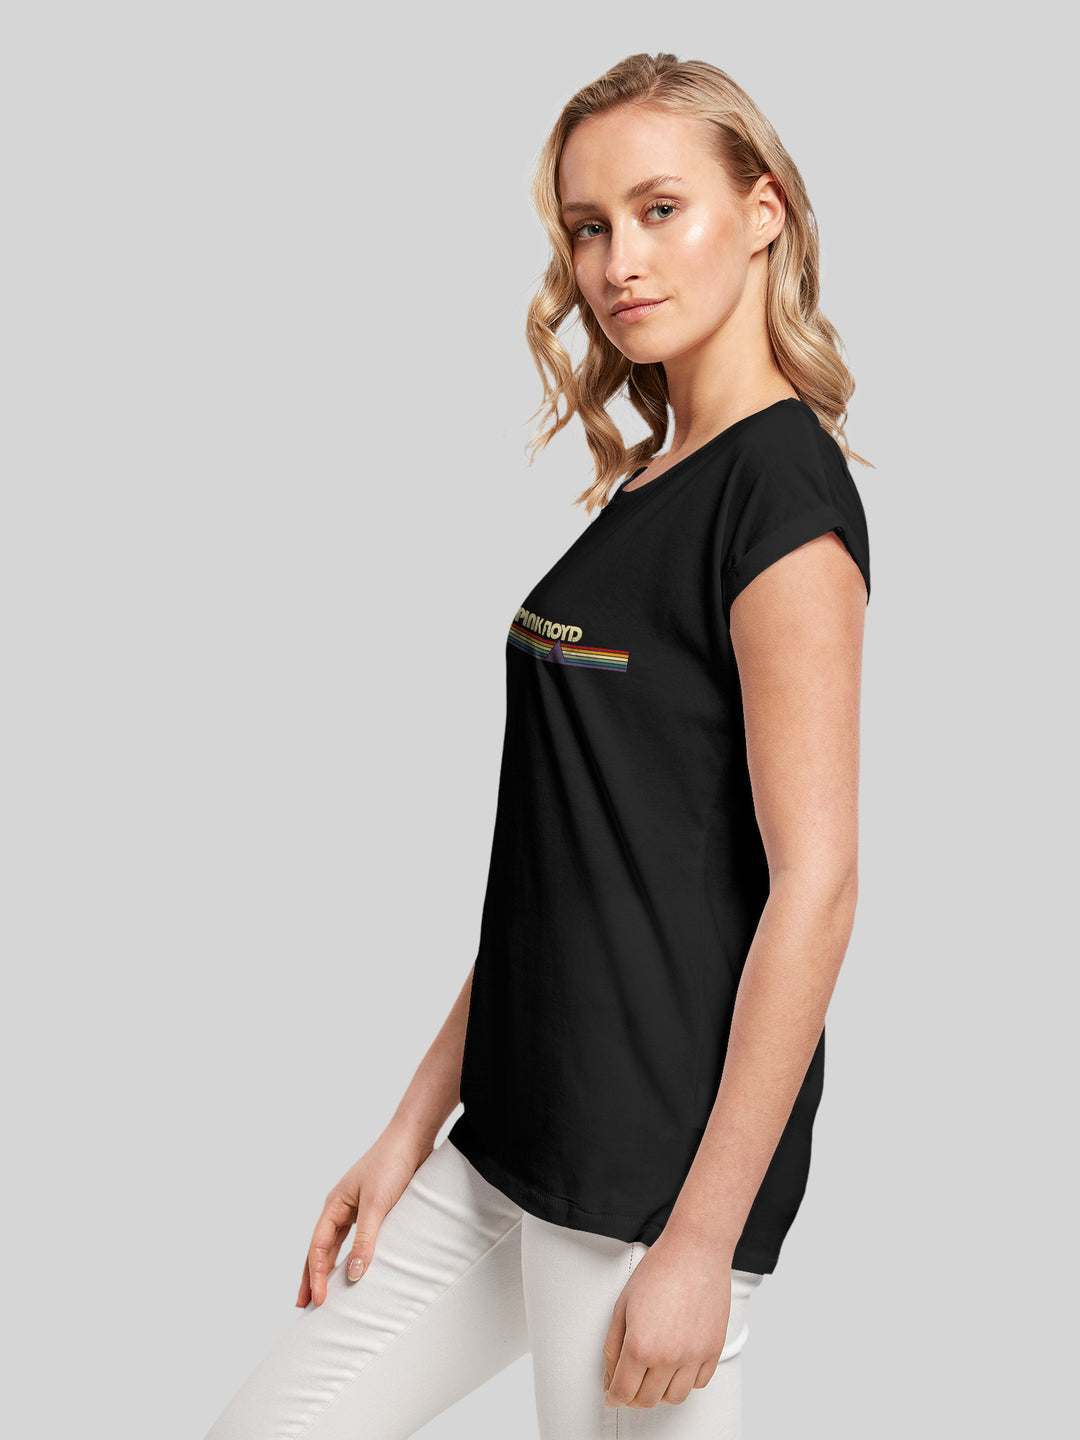 Pink Floyd T-Shirt | Prism Retro Stripes | Premium Kurzarm Damen T Shirt